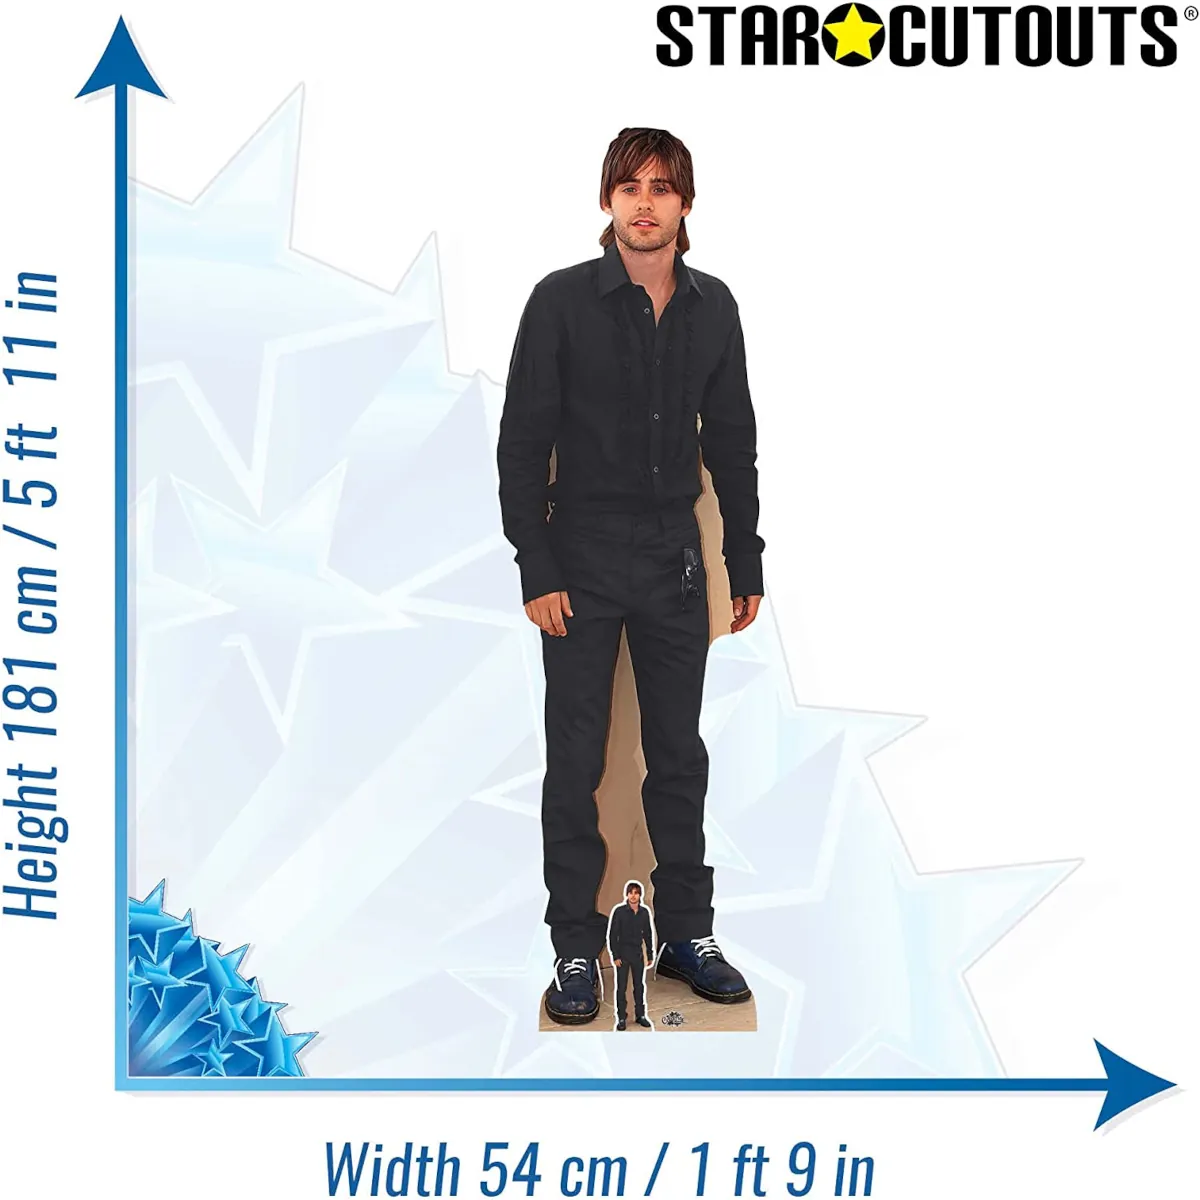 CS990 Jared Leto 'Year 2000' (American Actor) Lifesize + Mini Cardboard Cutout Standee Size